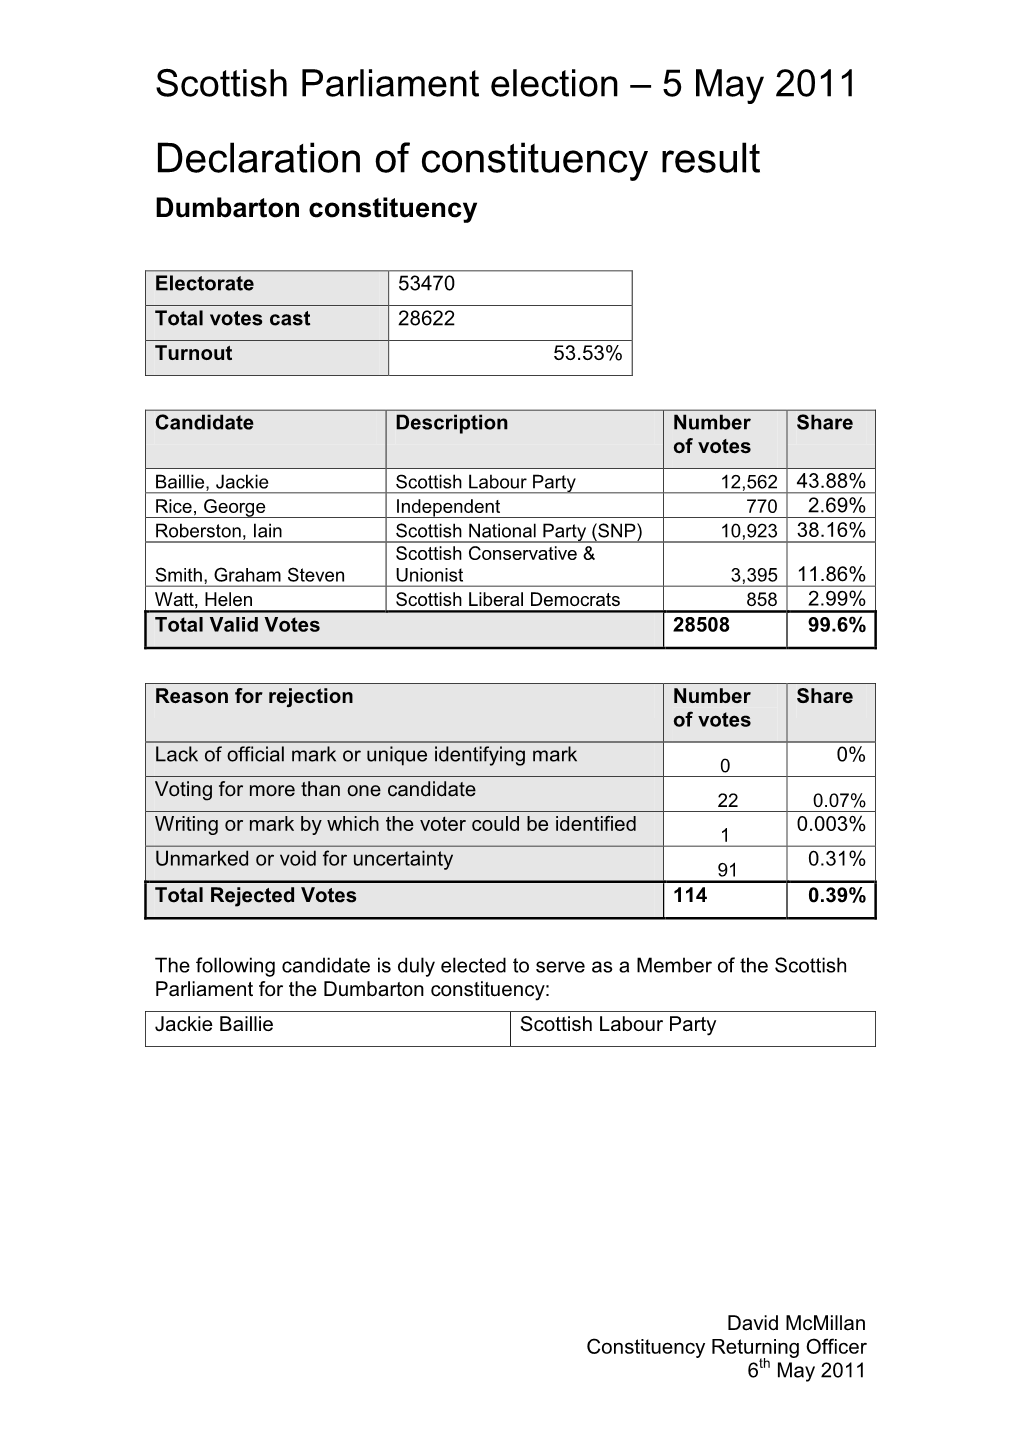 Scottish Parliament Election Results 2011 (Dumbarton)